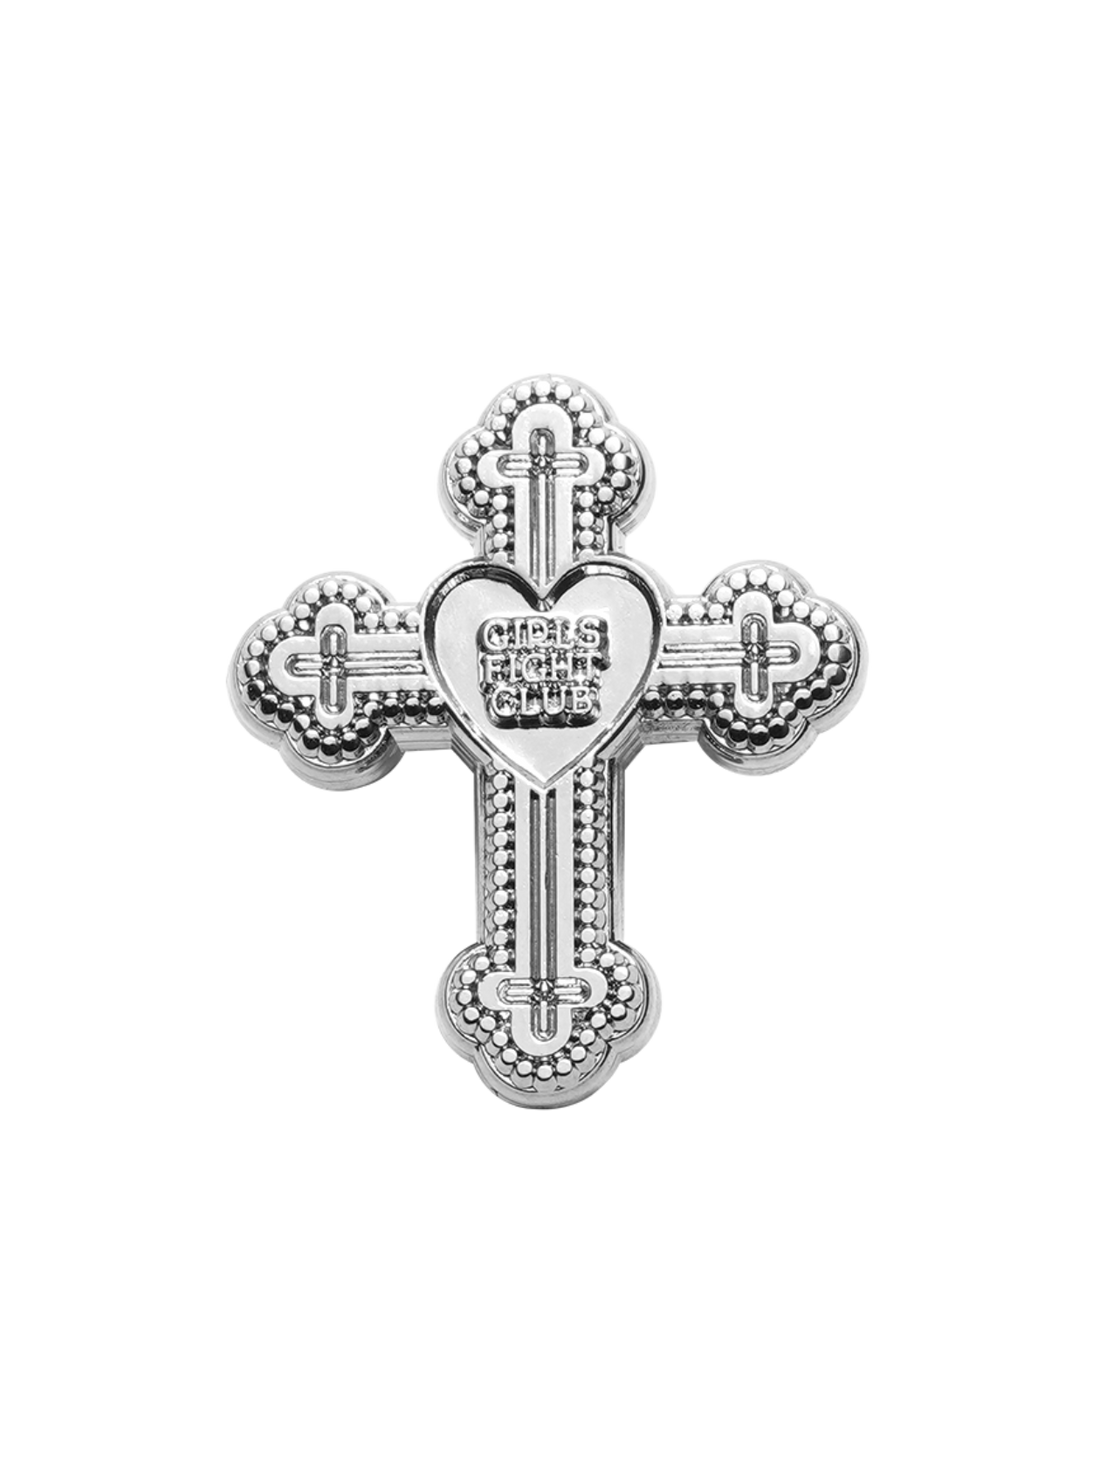 Trust cross badge